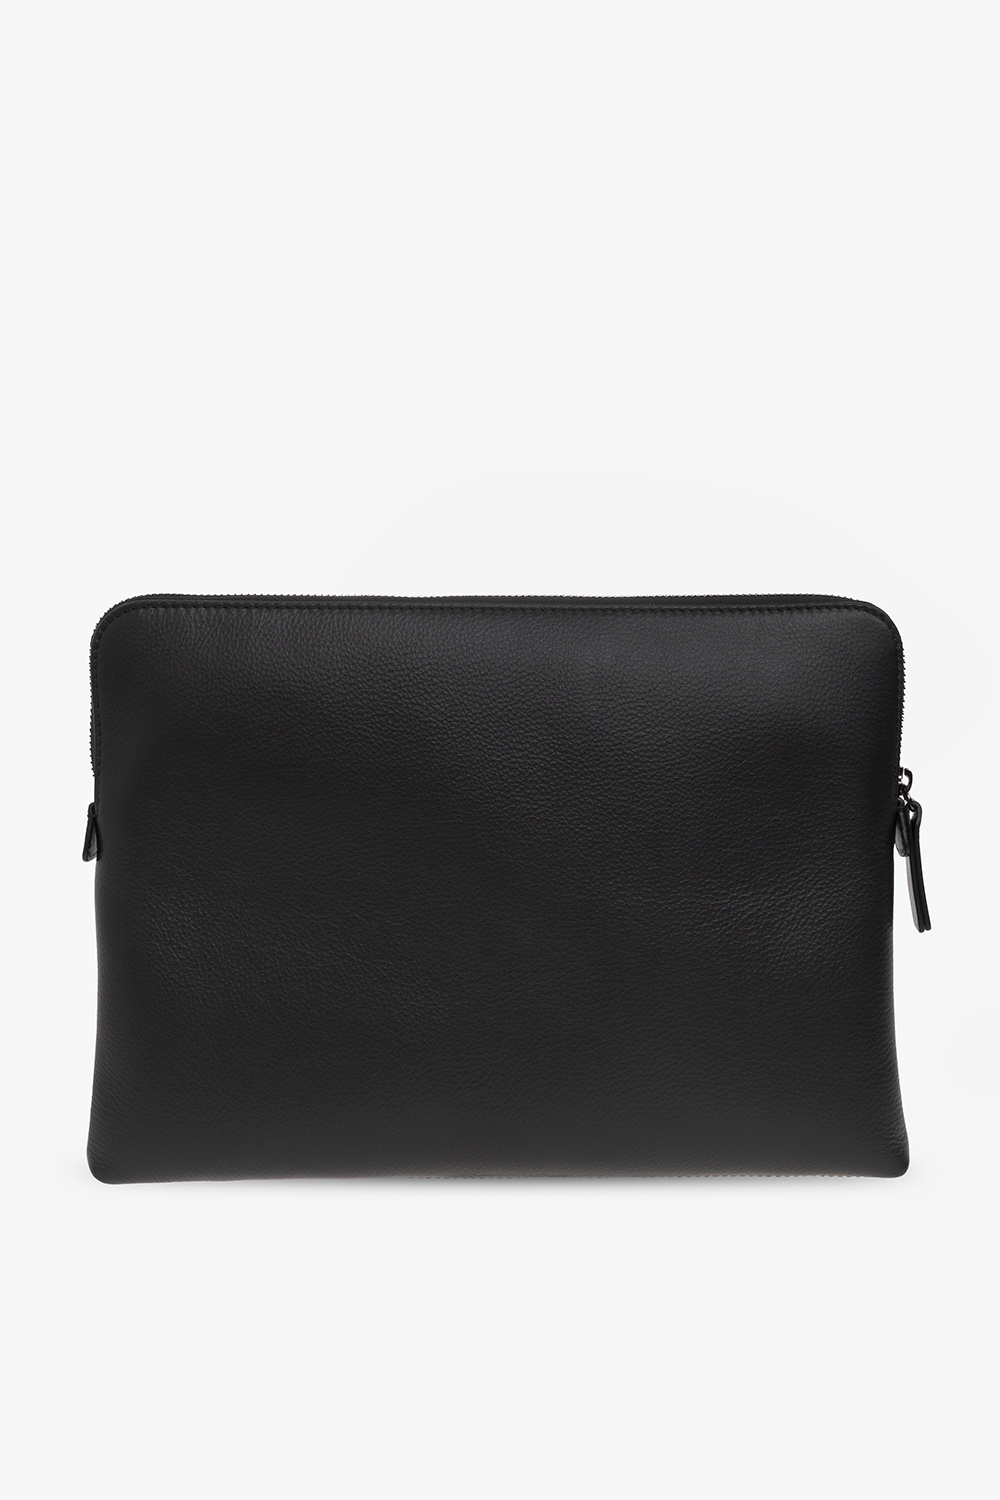 Dsquared2 ‘Bob’ handbag